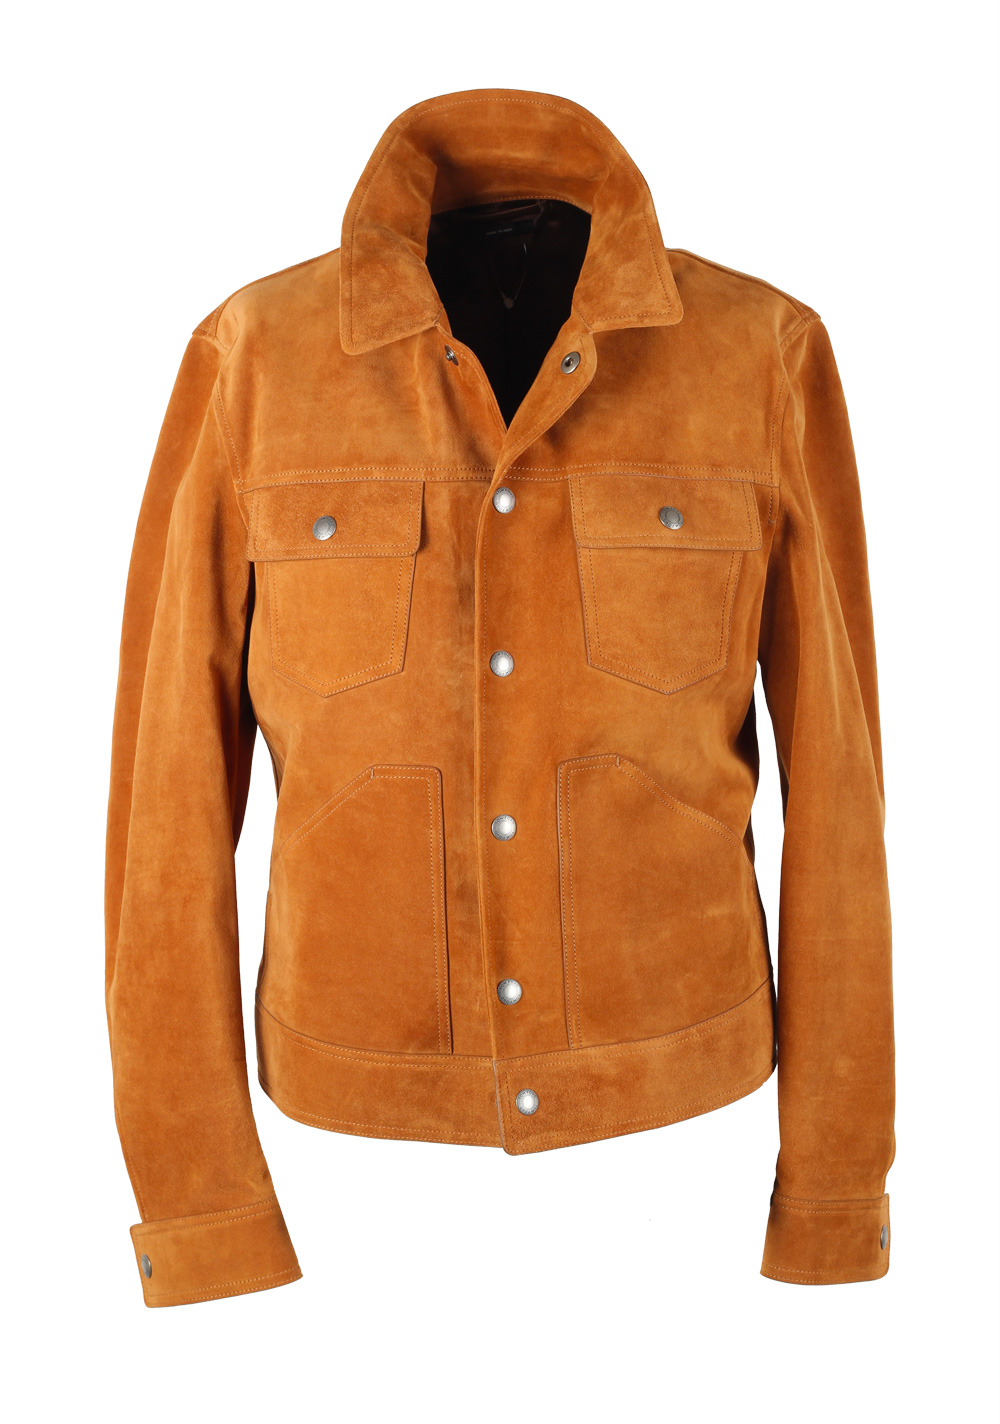 TOM FORD Brown Cashmere Suede Western Jacket Size 48 / 38R U.S ...